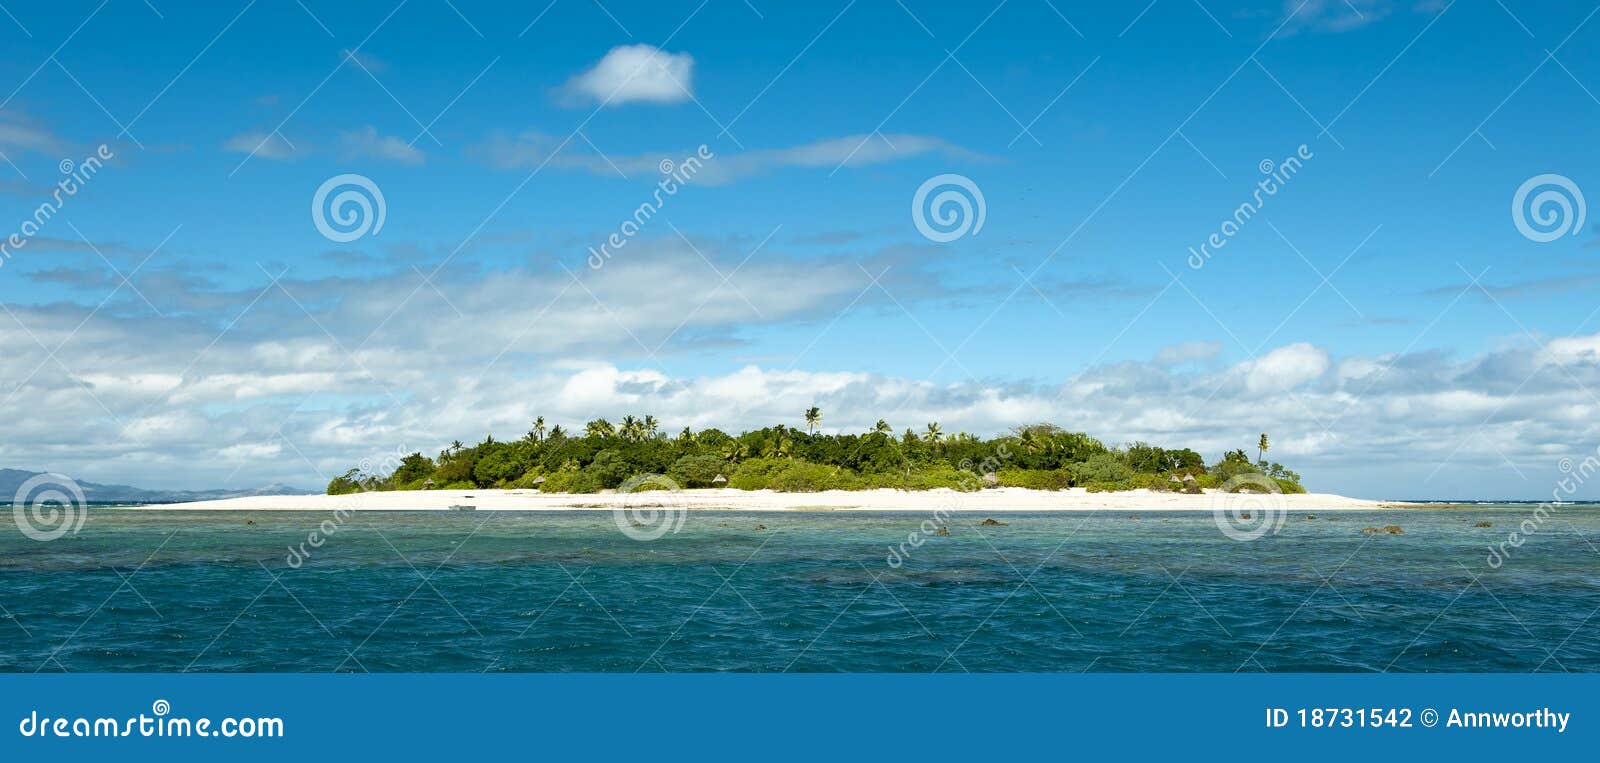 uninhabited remote island part of fiji